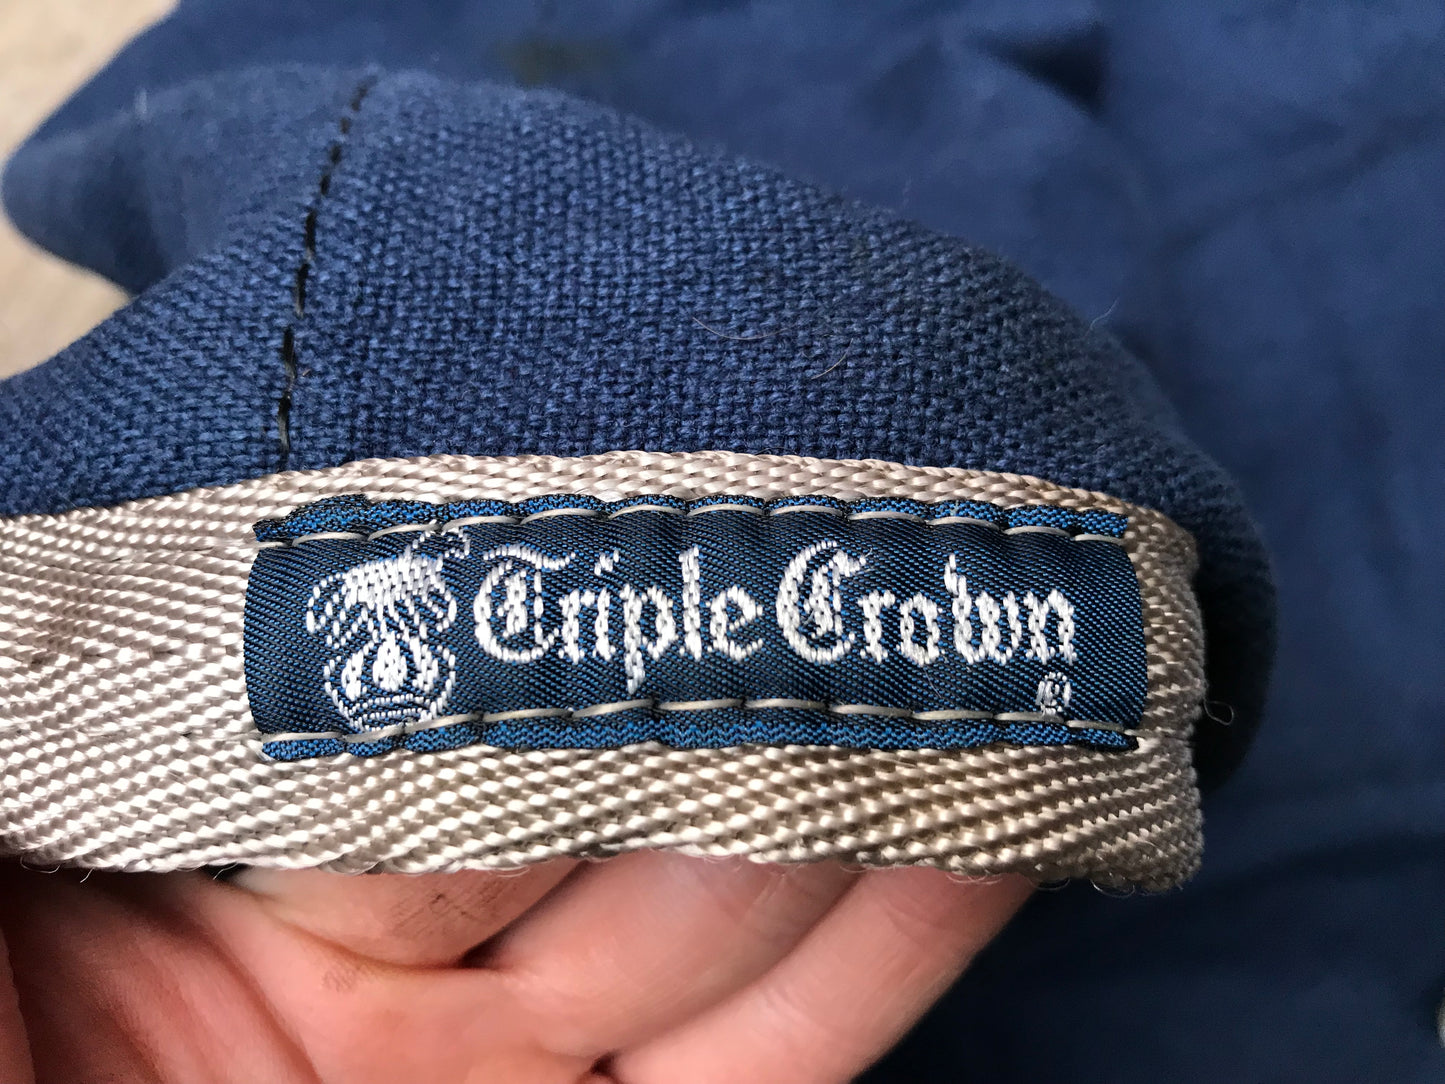 Triple crown 6’6 cotton sheet navy and white FREE POSTAGE *